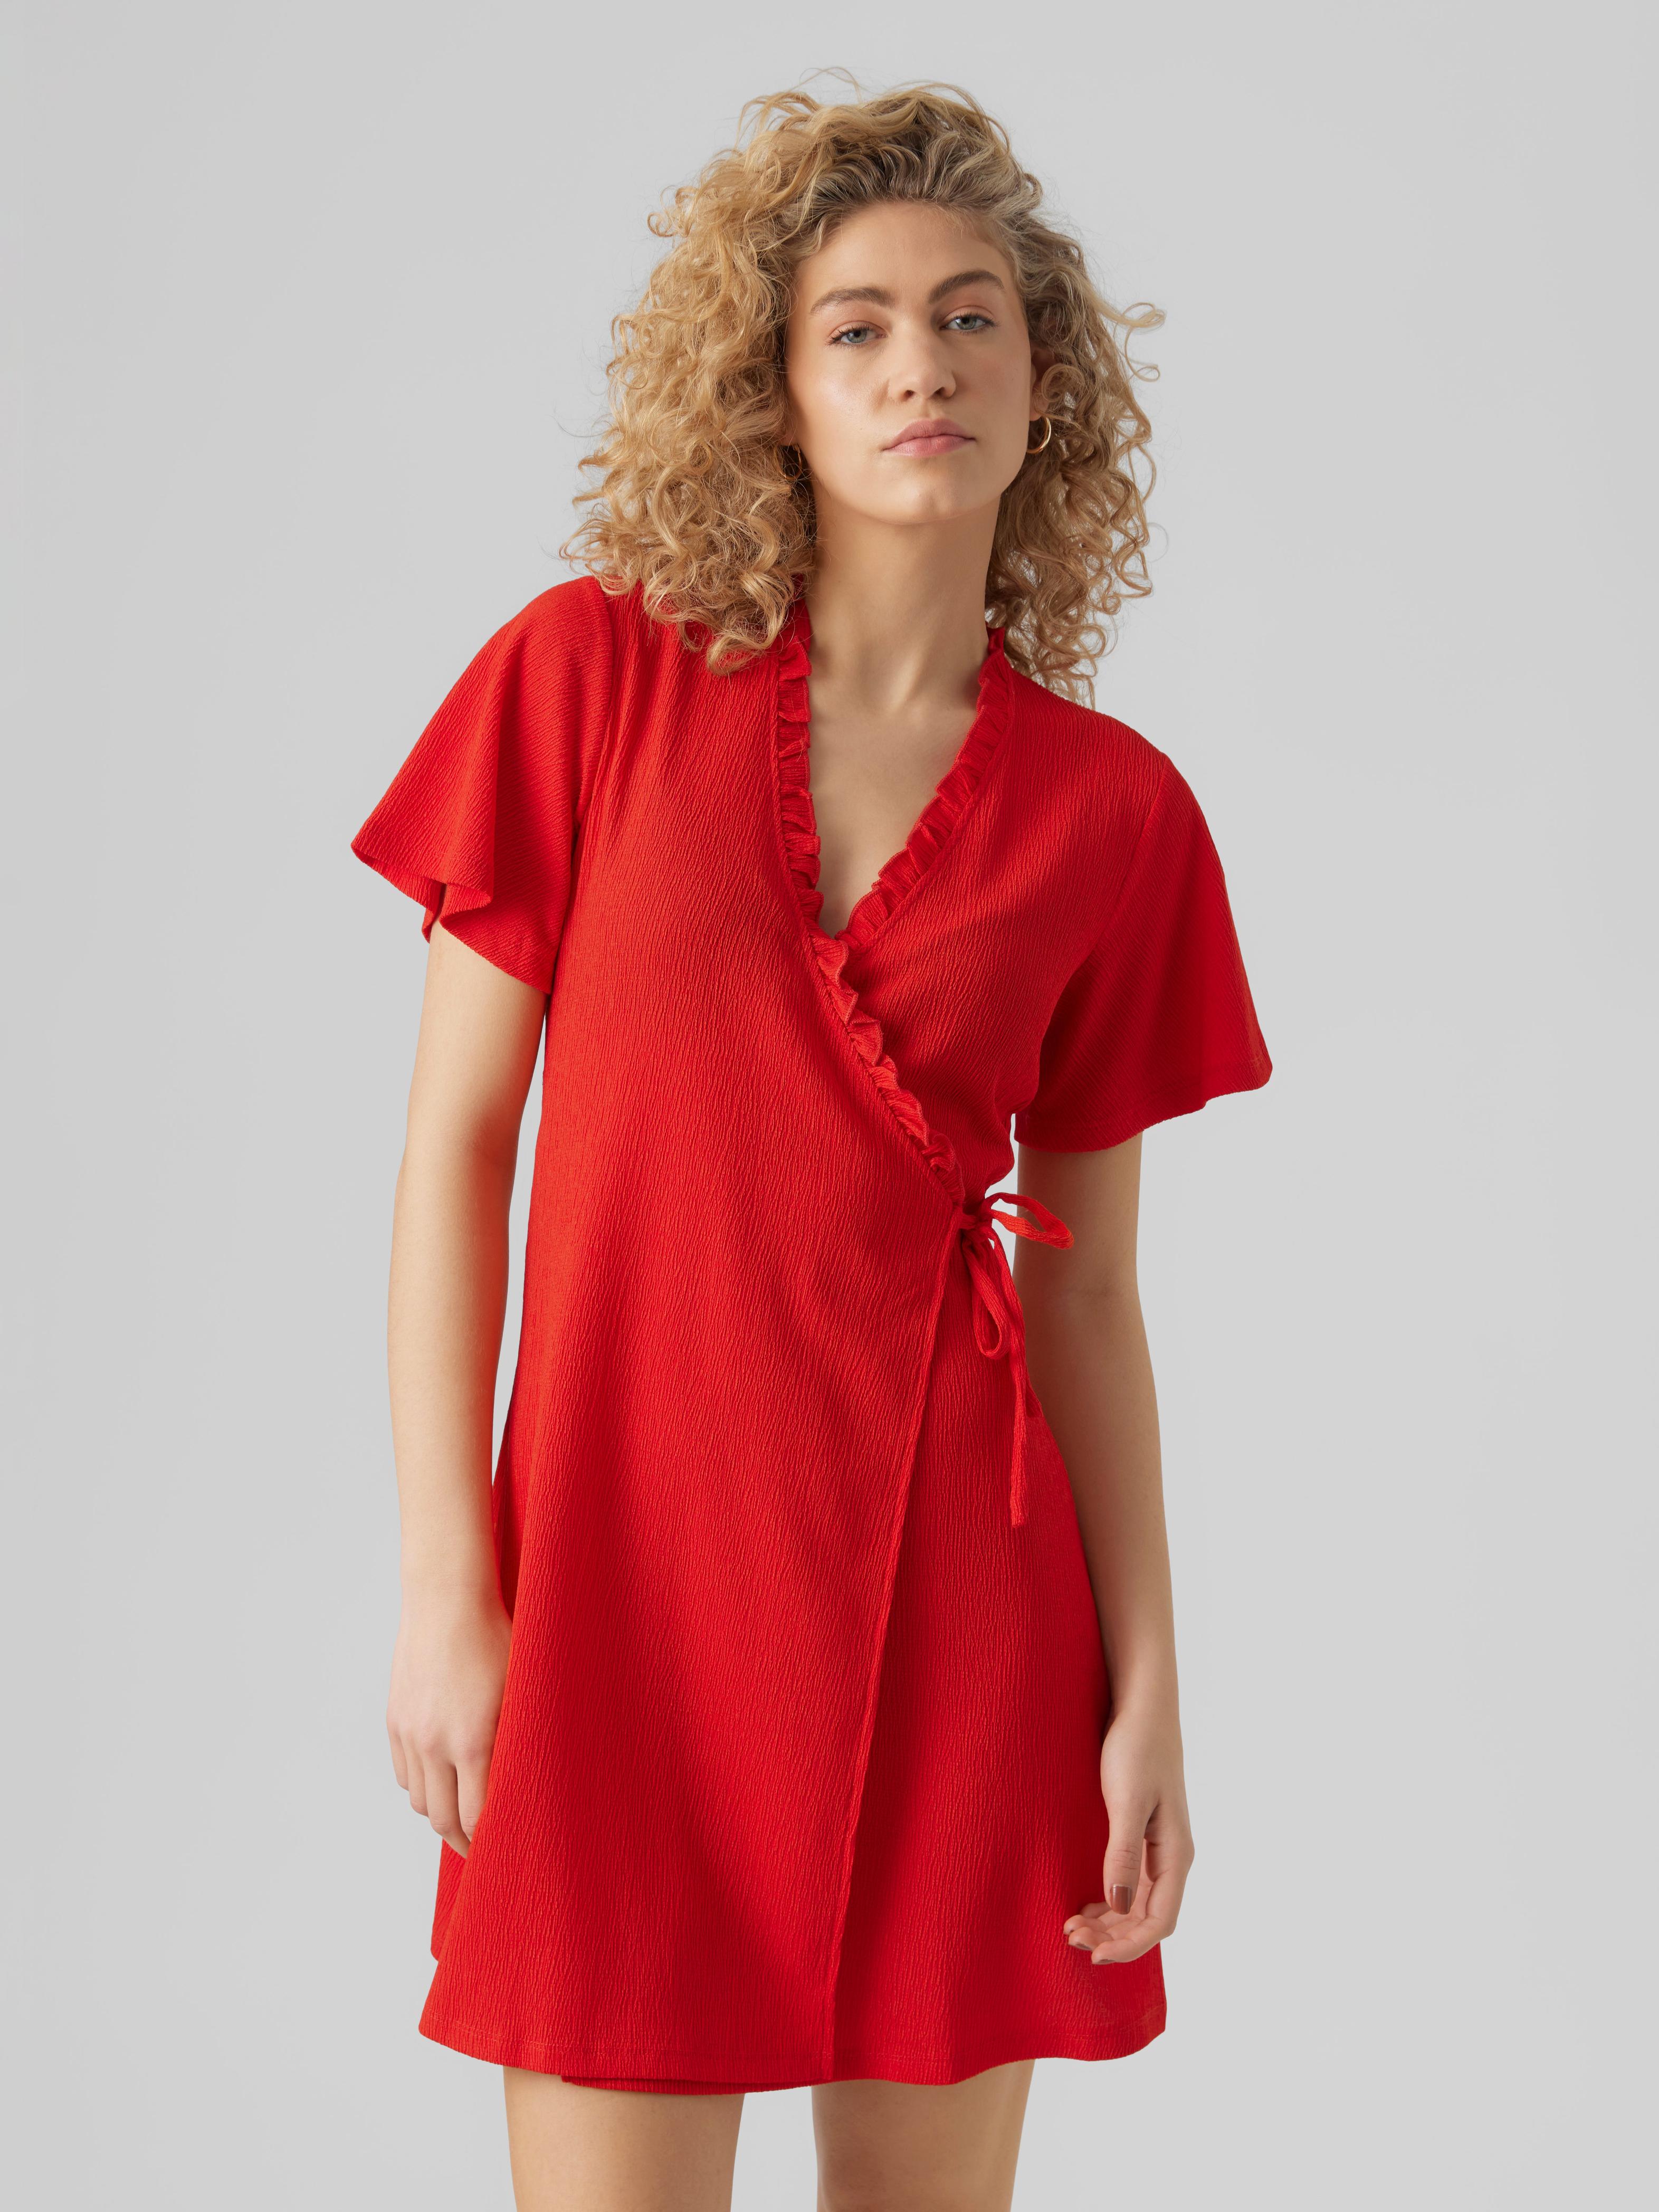 Tilbud: VMHAYA Kort kjole kr 219,97 på Vero Moda